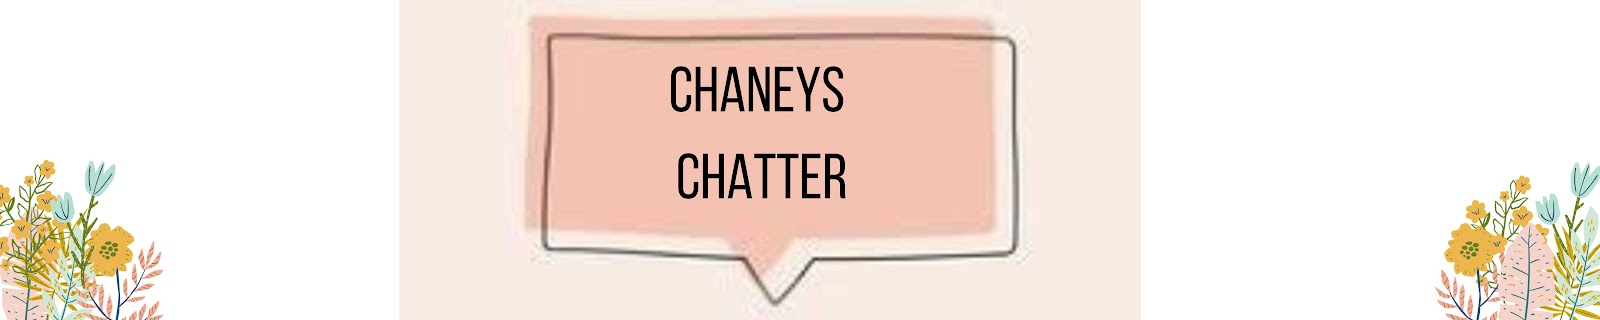 Chaneys Chatter